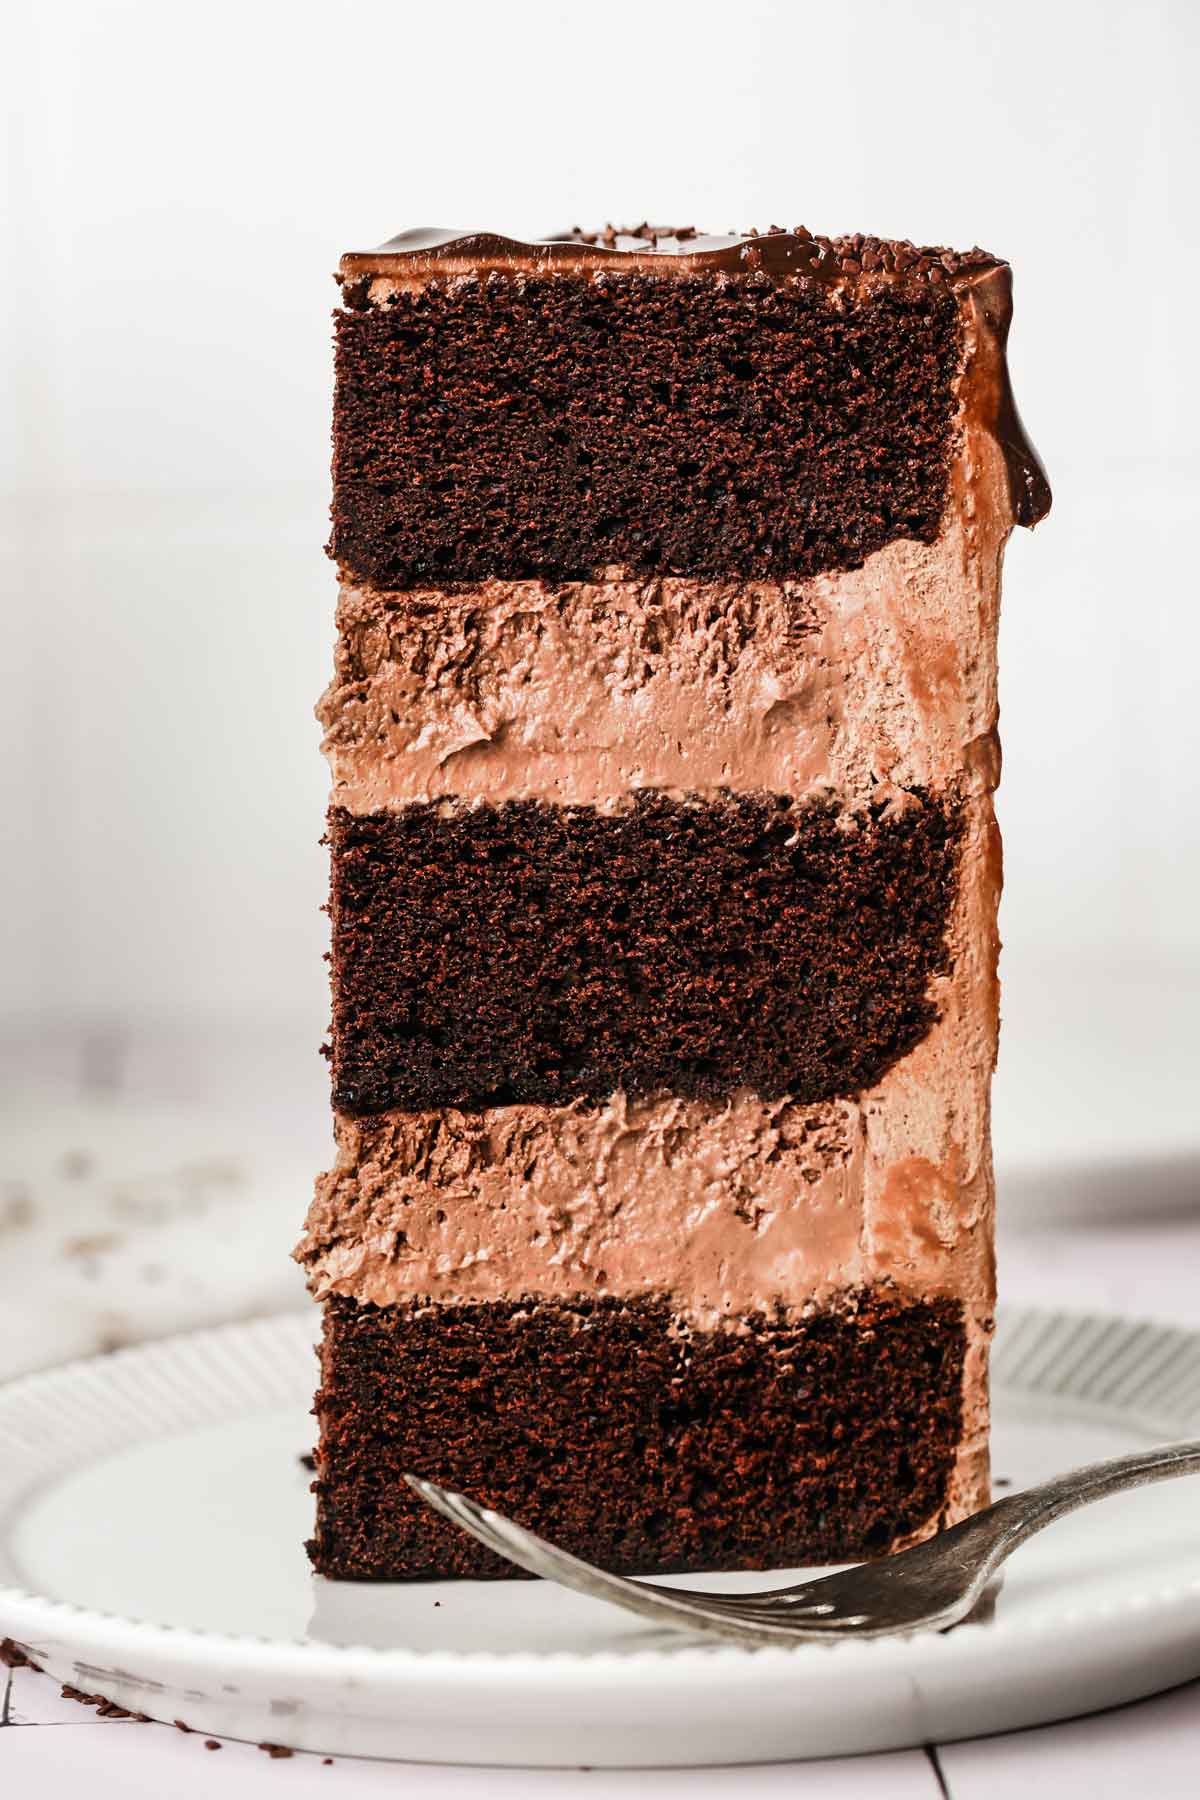 sliced chocolate ganache cremeux cake